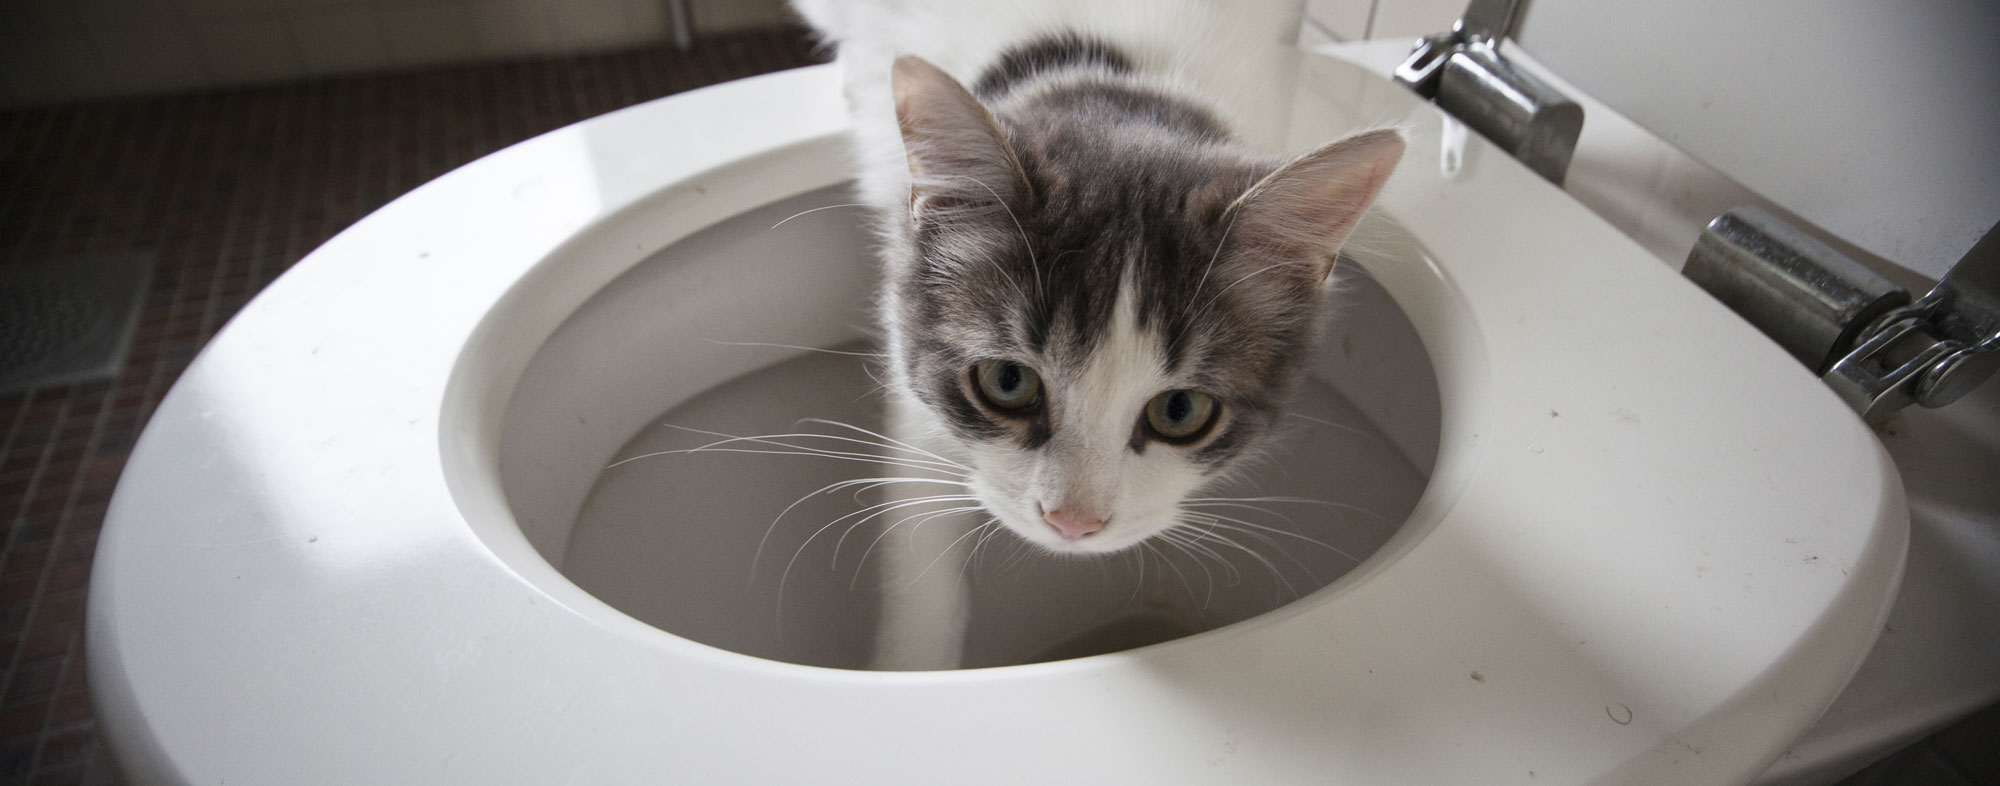 Cat S Bathroom Habits With Cat Toilet Training Kit